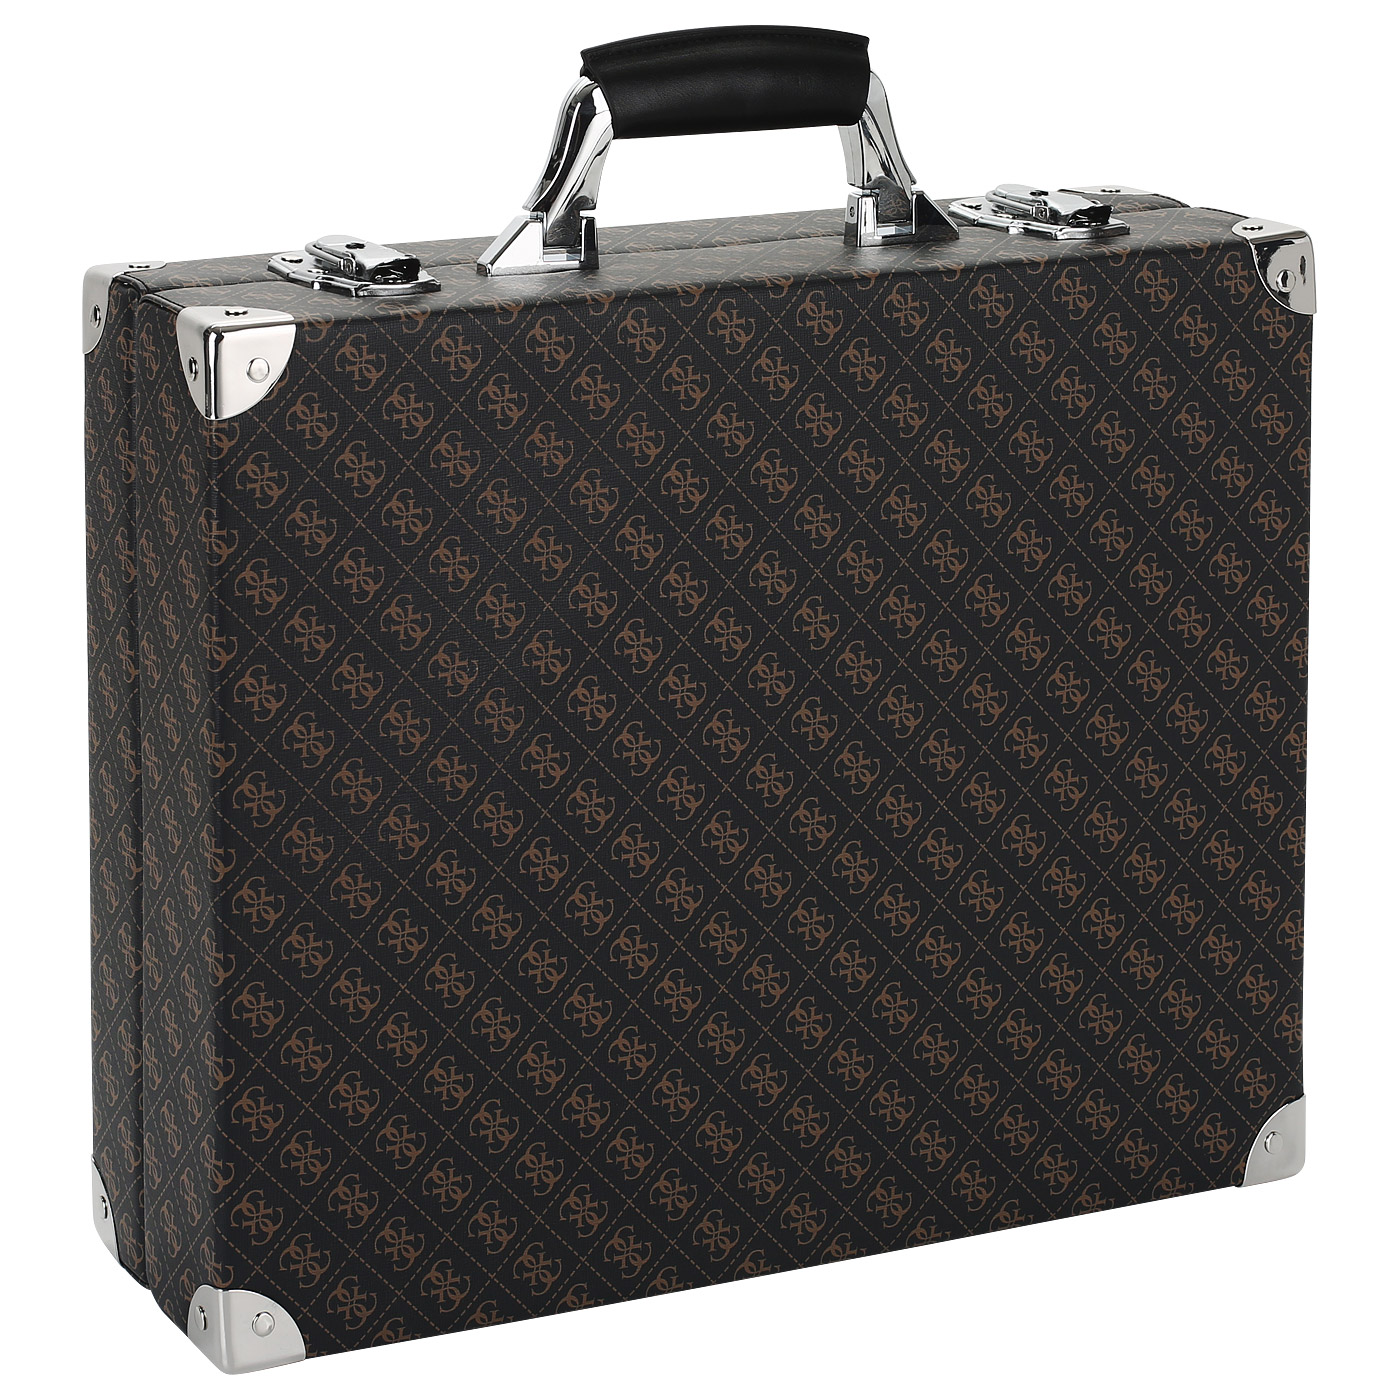 Мужской чемодан-кейс с логотипом бренда Guess Cay